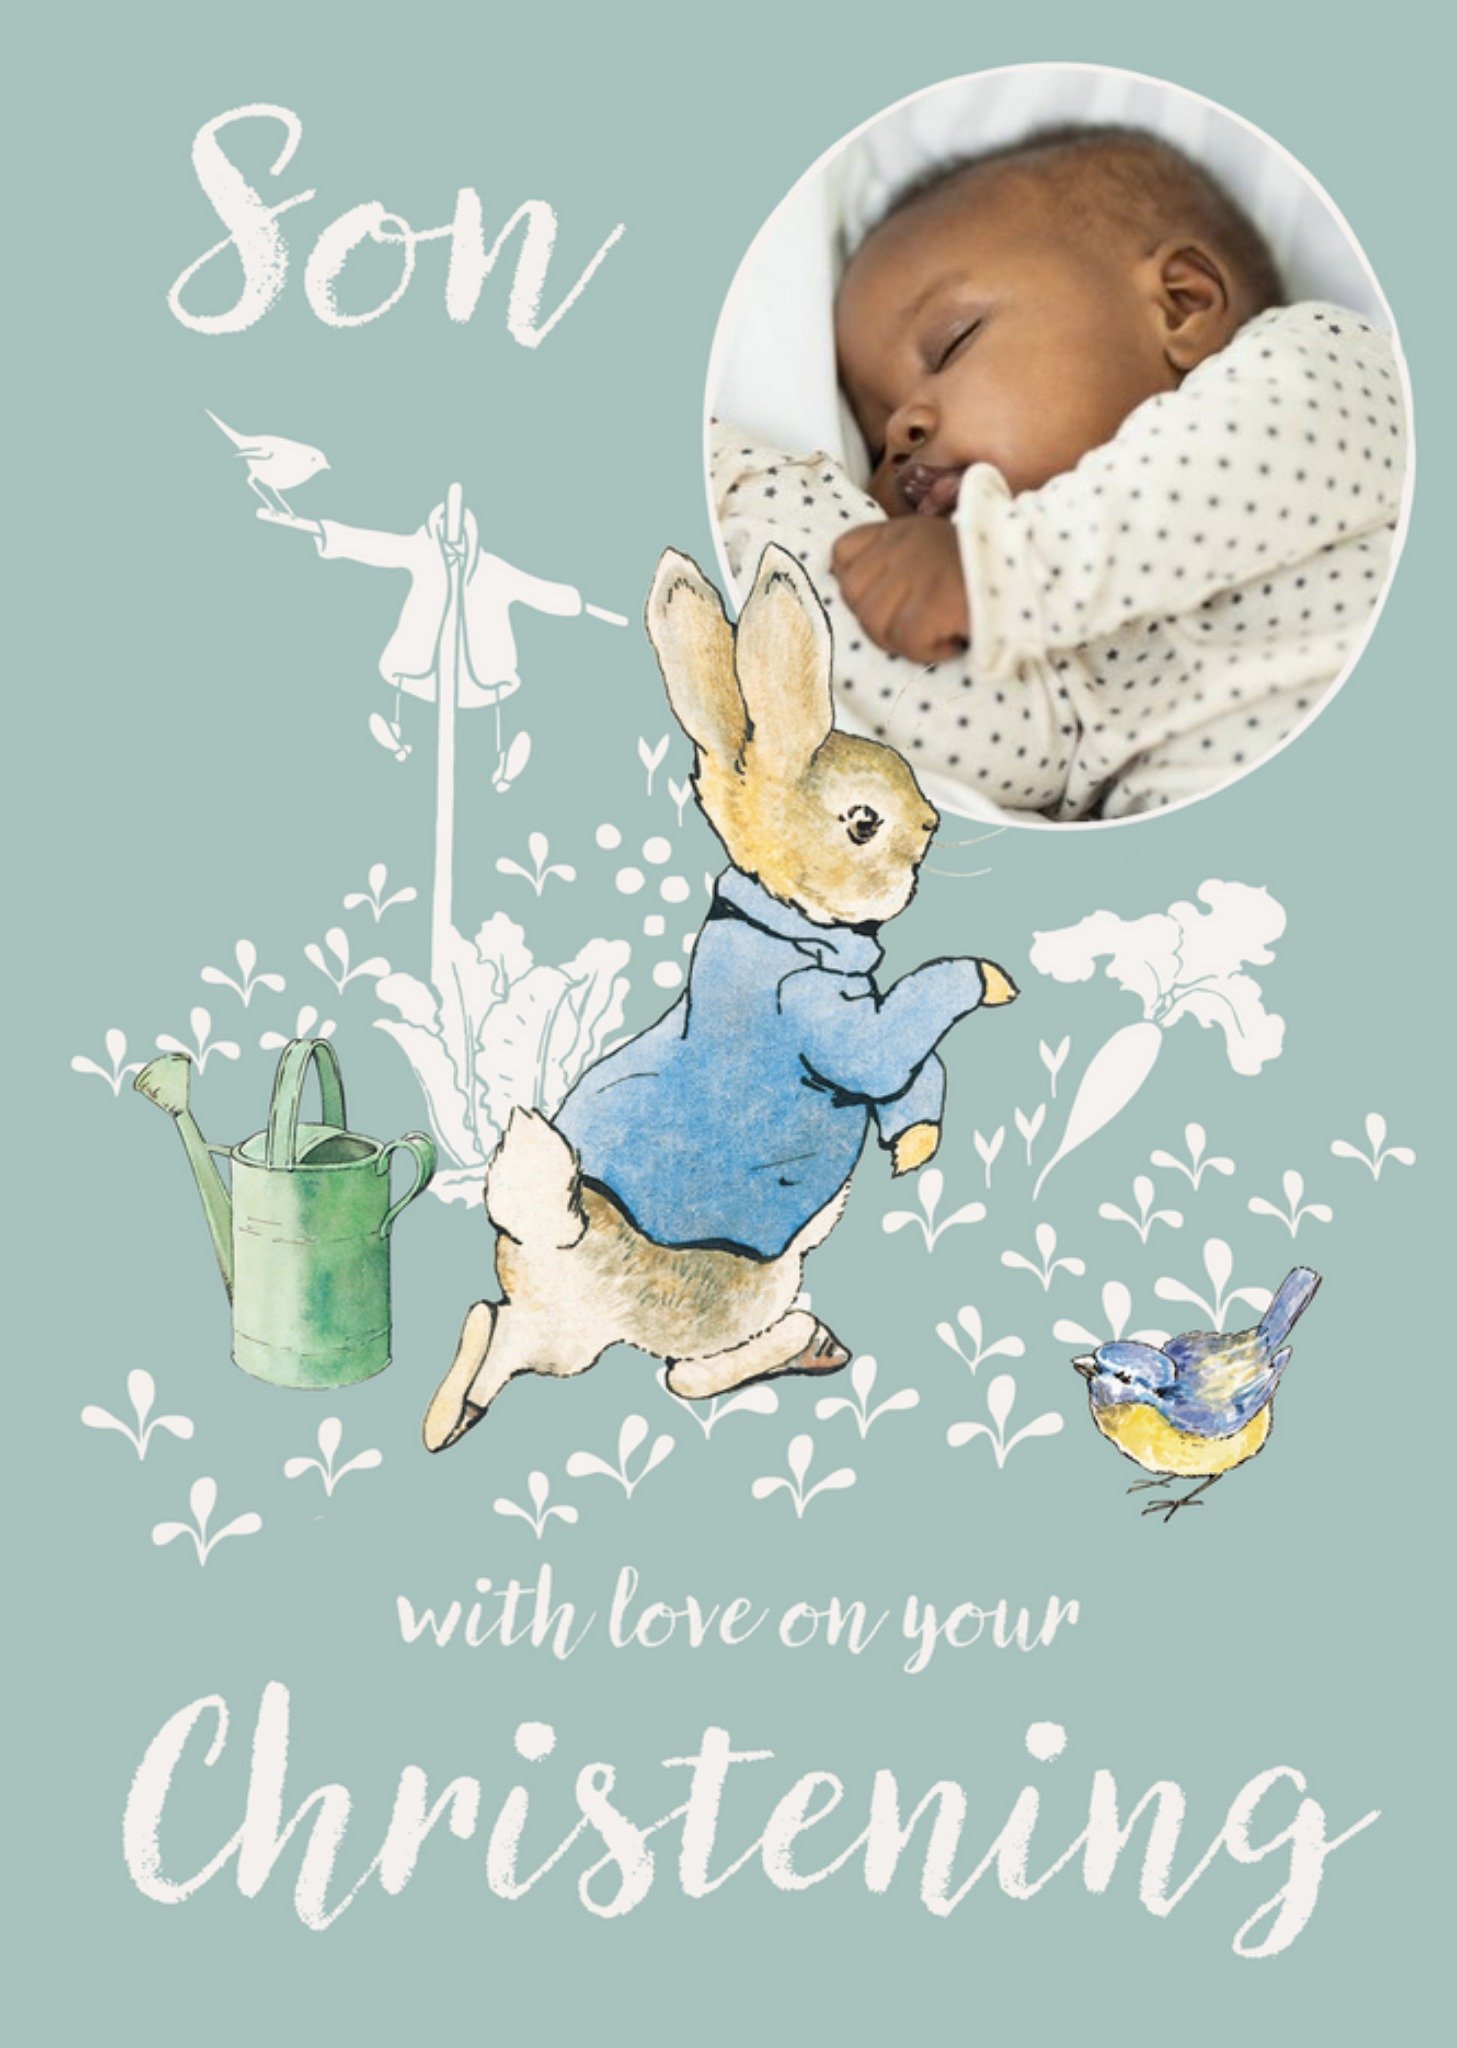 Beatrix Potter Peter Rabbit Illustration Son Christening Photo Upload Card Ecard